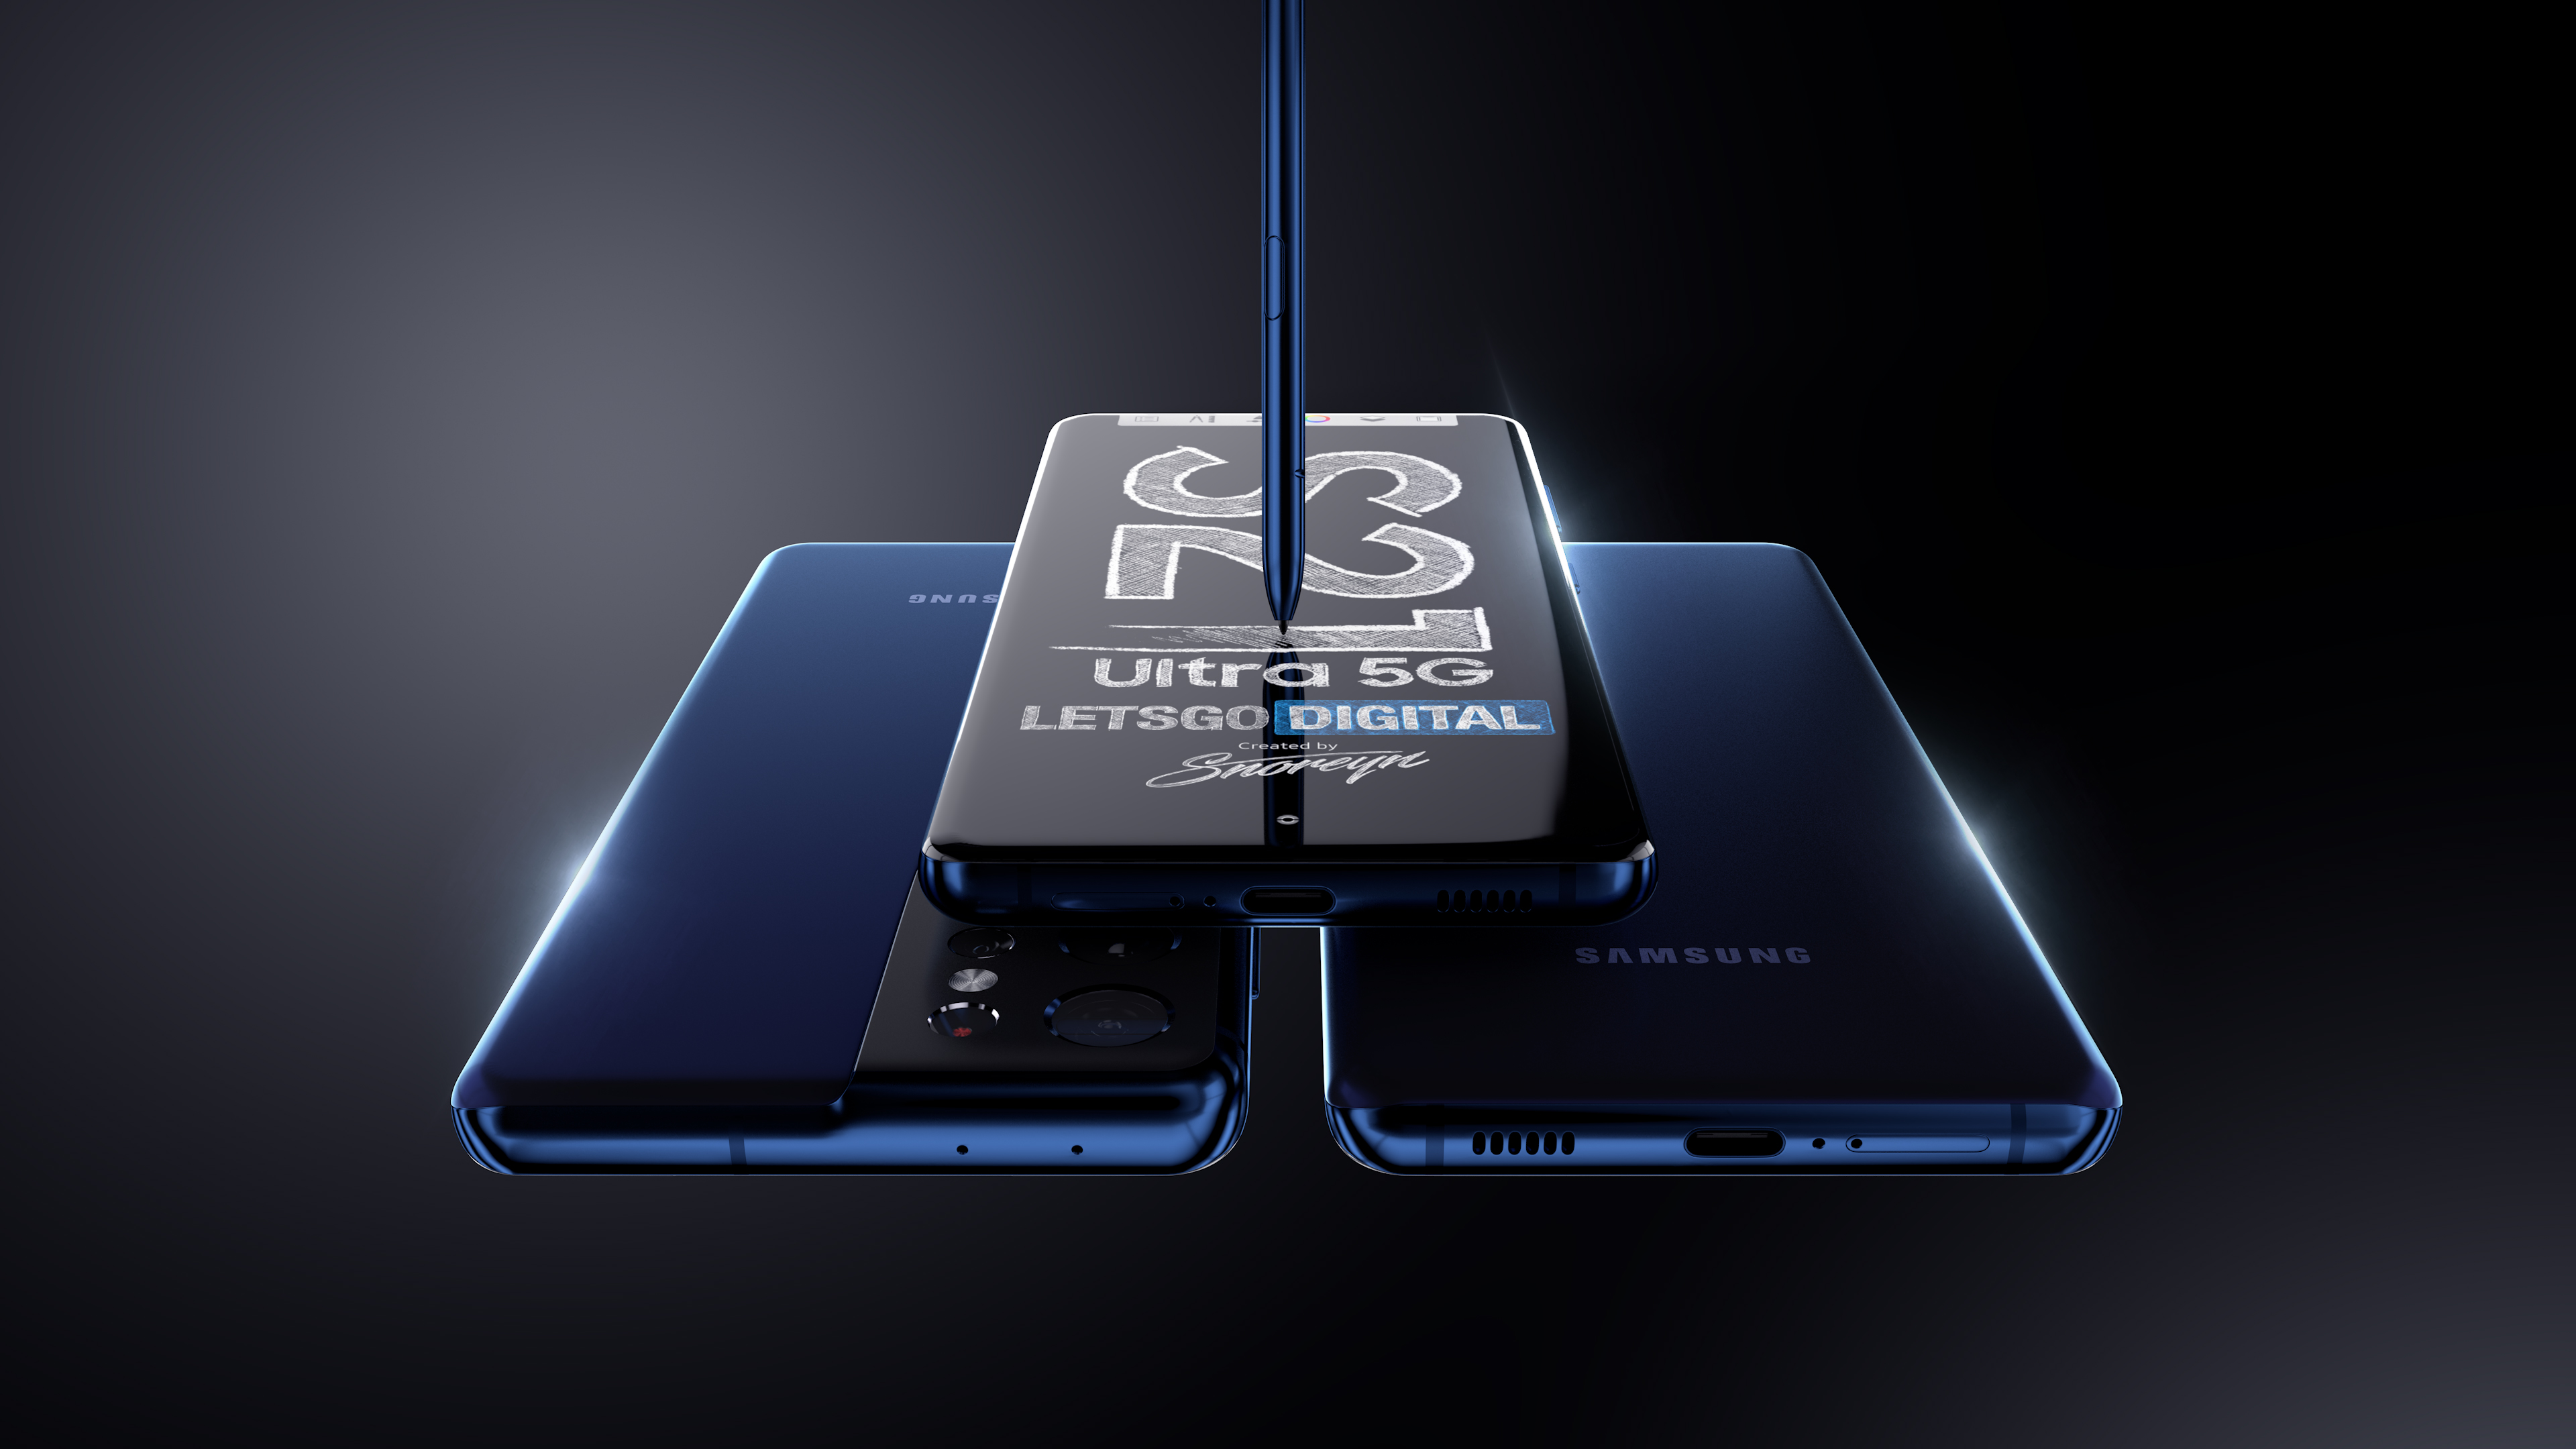 Samsung Galaxy S21 Ultra Showed On New Renders Along With S Pen Stylus Geek Tech Online